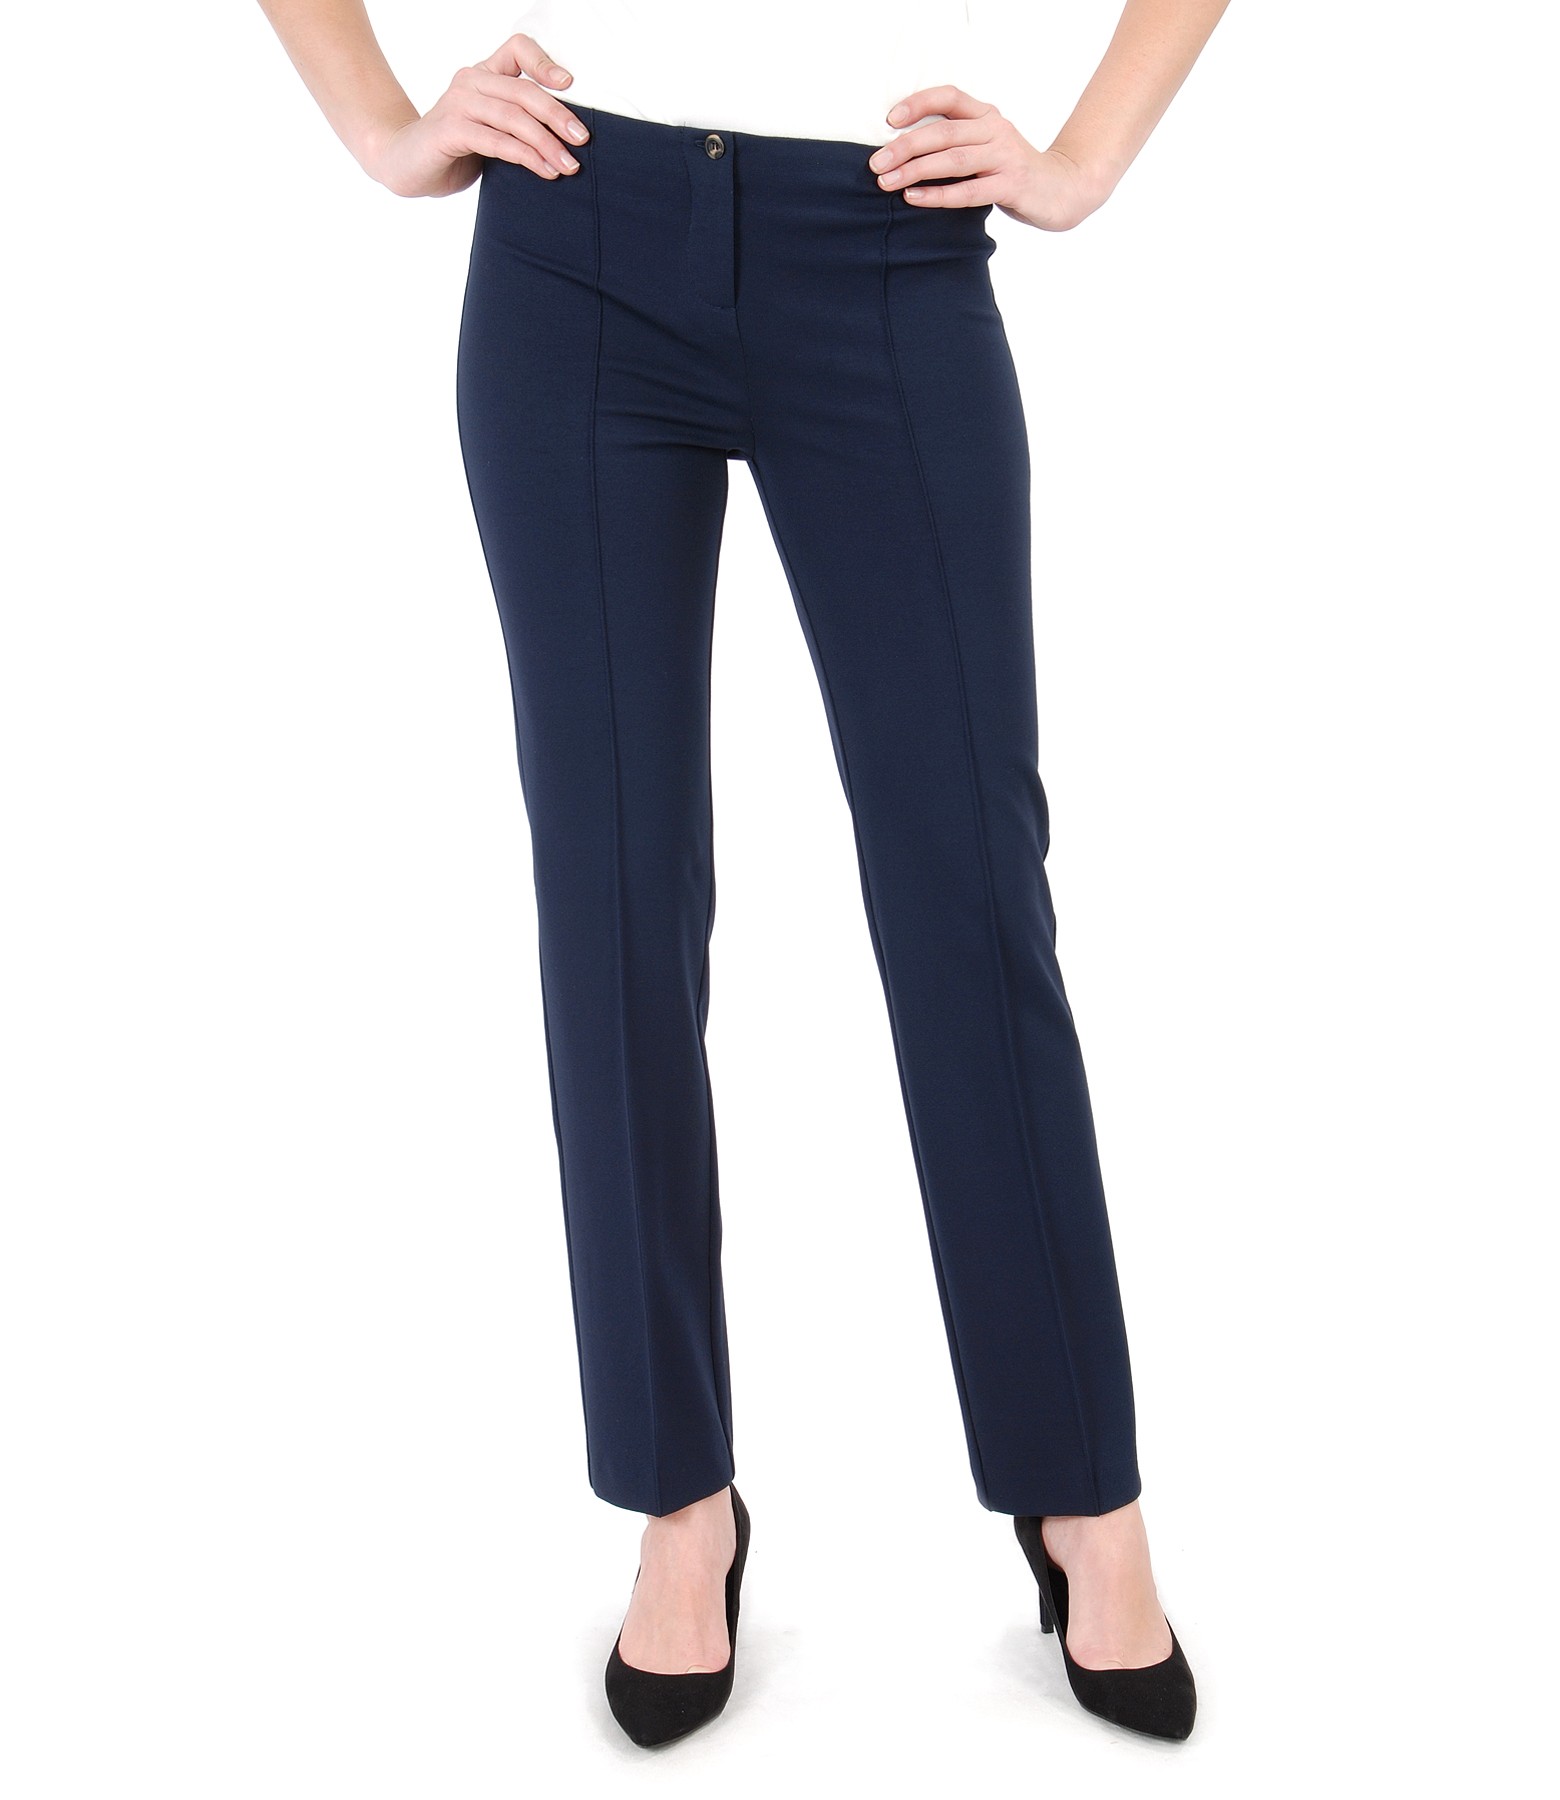 Office pants made of elastic jersey navy blue - YOKKO